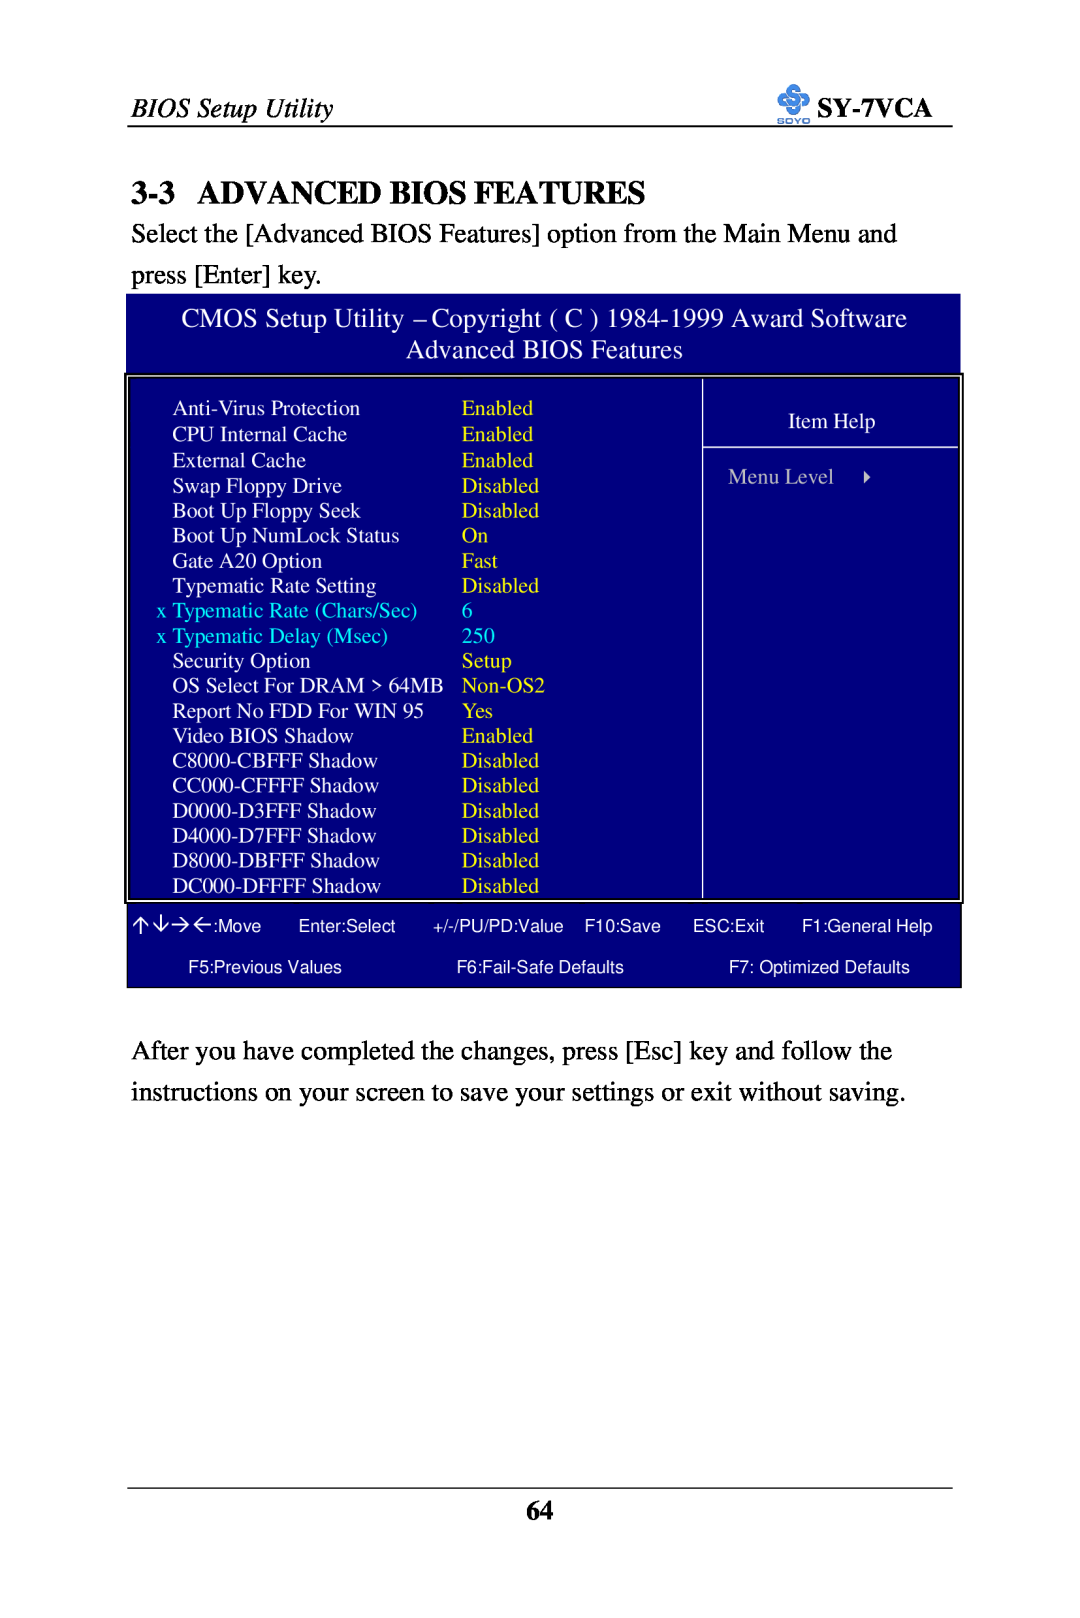 SOYO SY-7VCA Advanced Bios Features, Advanced BIOS Features, CMOS Setup Utility - Copyright C 1984-1999 Award Software 